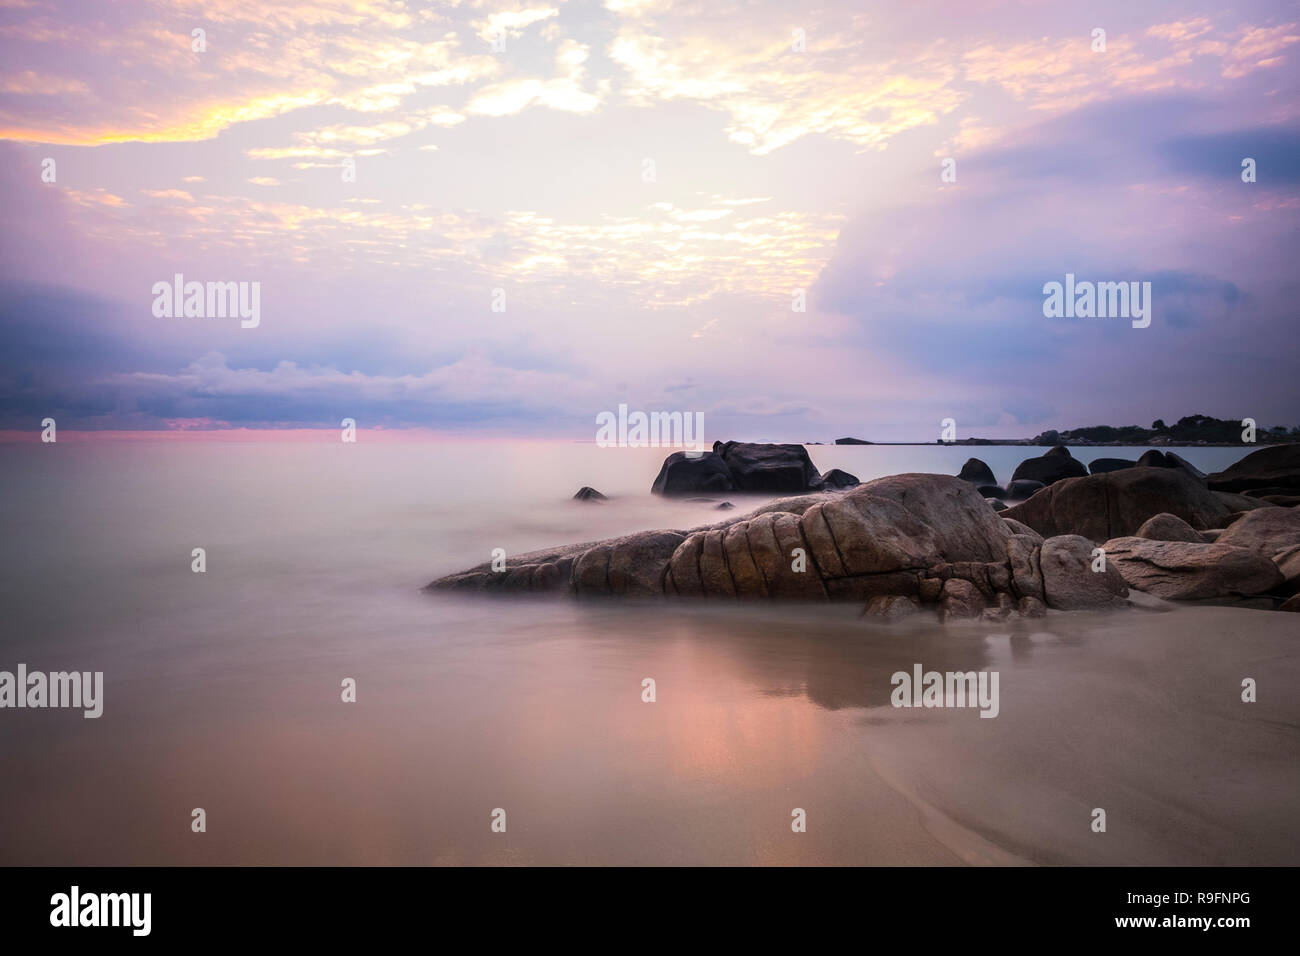 Sunrise at Bintan Island. Sand sea sky clouds and stones Stock Photo